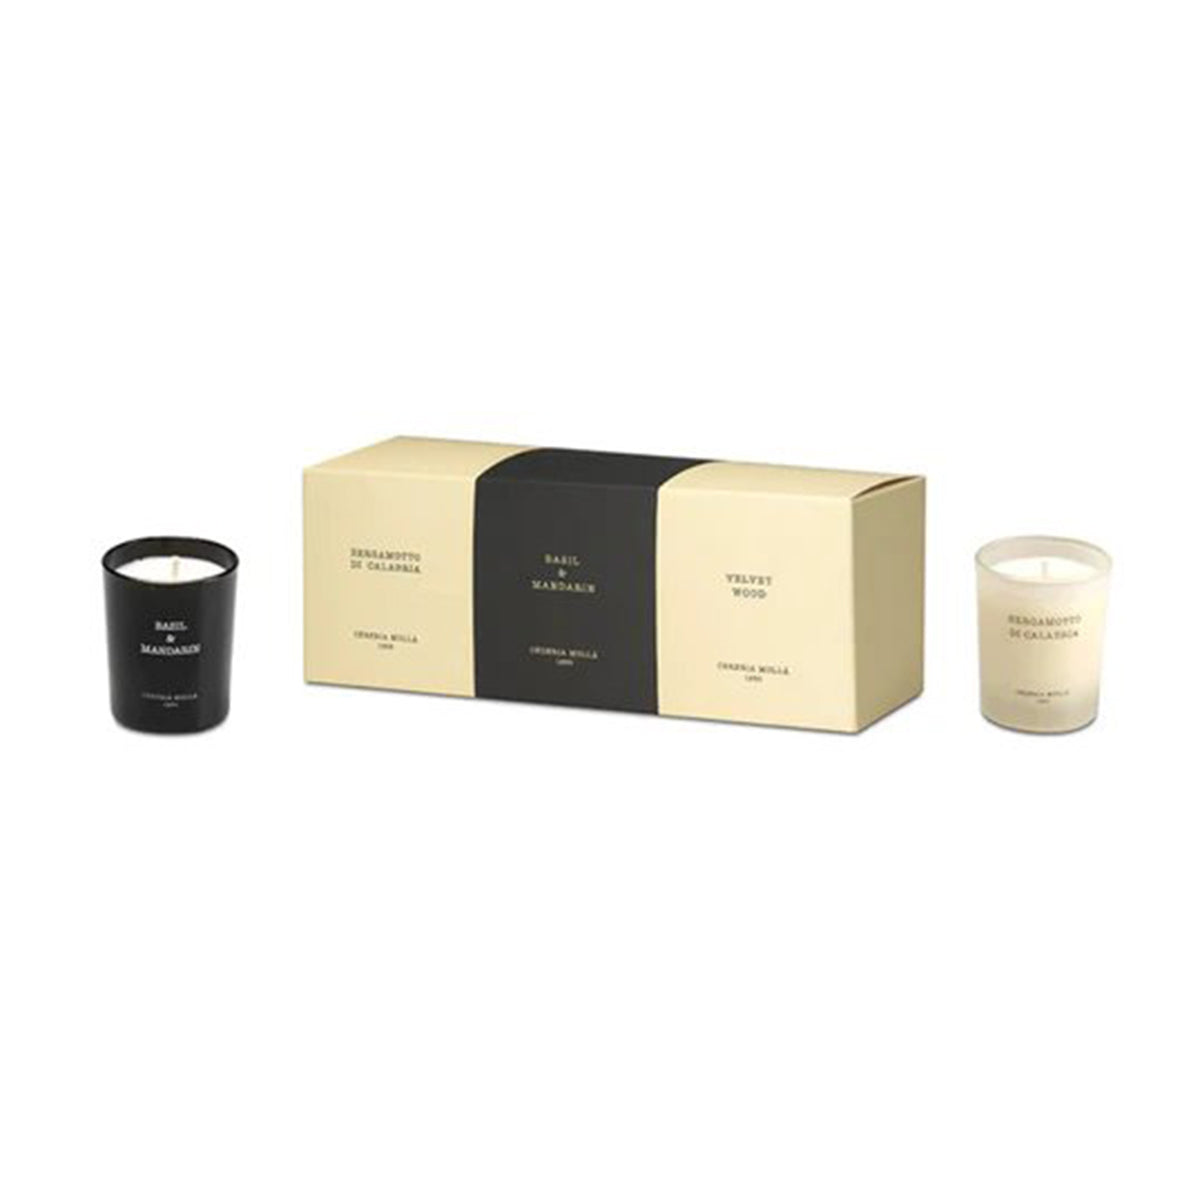 Cereria Molla 3 Votive Luxury Candle Gift Set (Bergamotto di calabria, Basil & Mandarin, Velvet Wood)